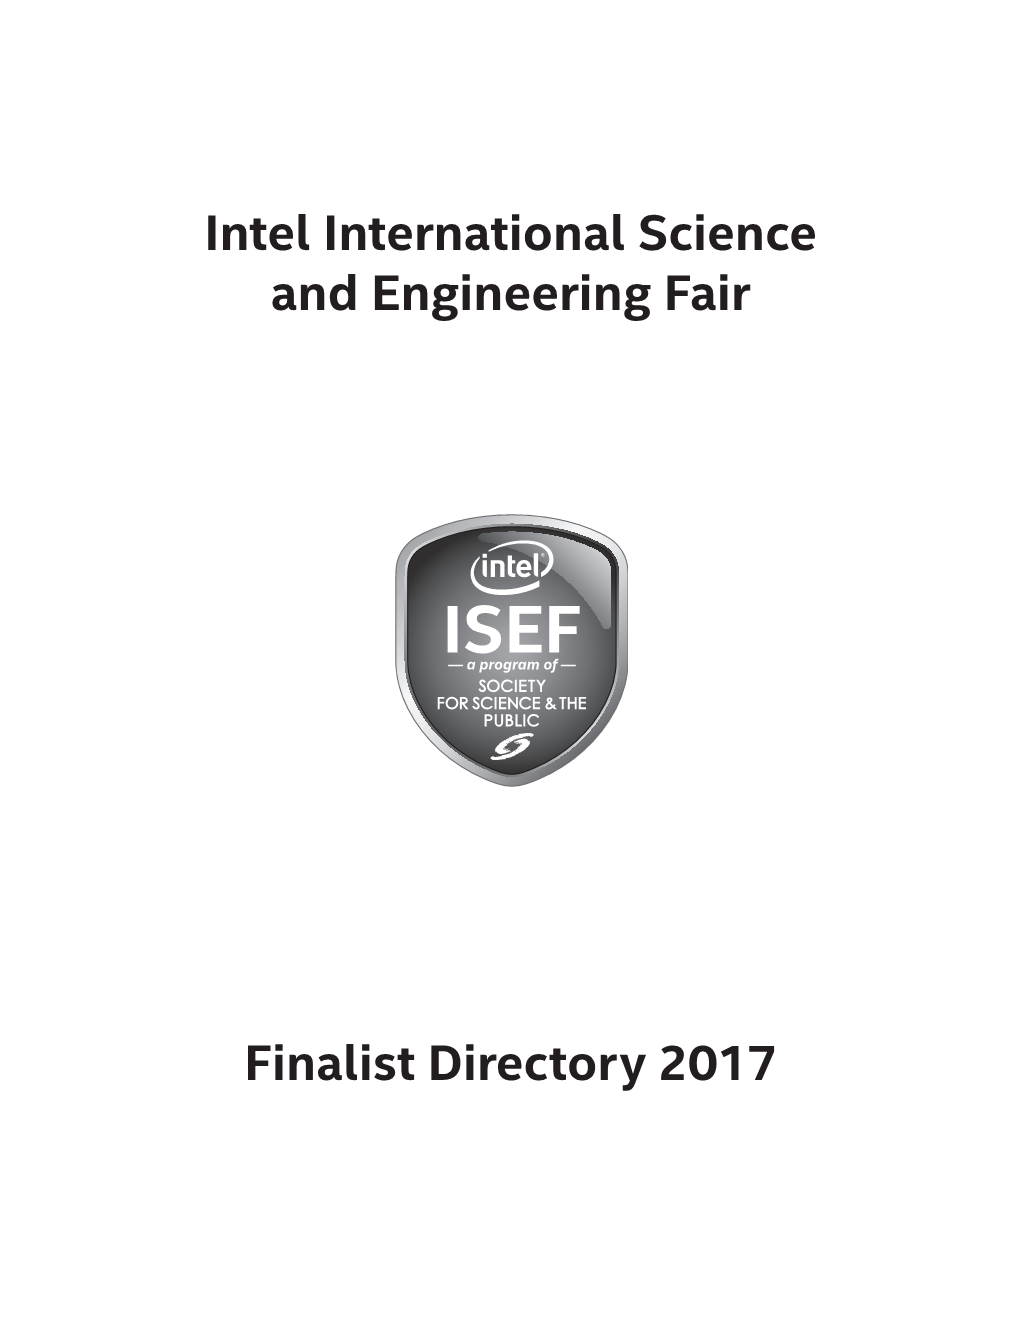 Intel International Science and Engineering Fair Finalist Directory